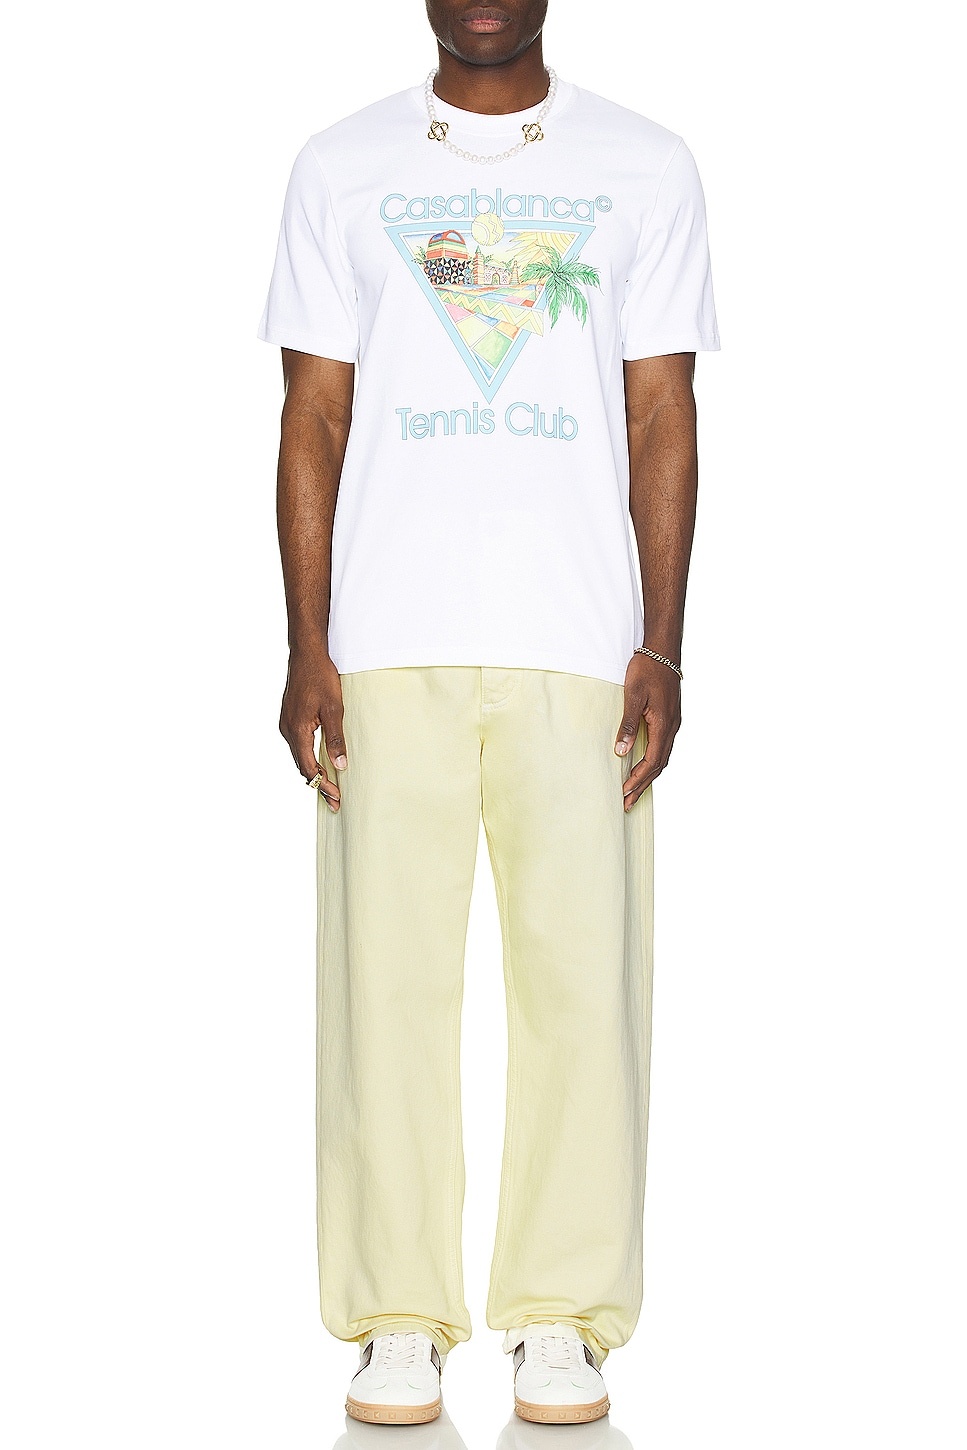 Afro Cubism Tennis Club Printed T-shirt - 4